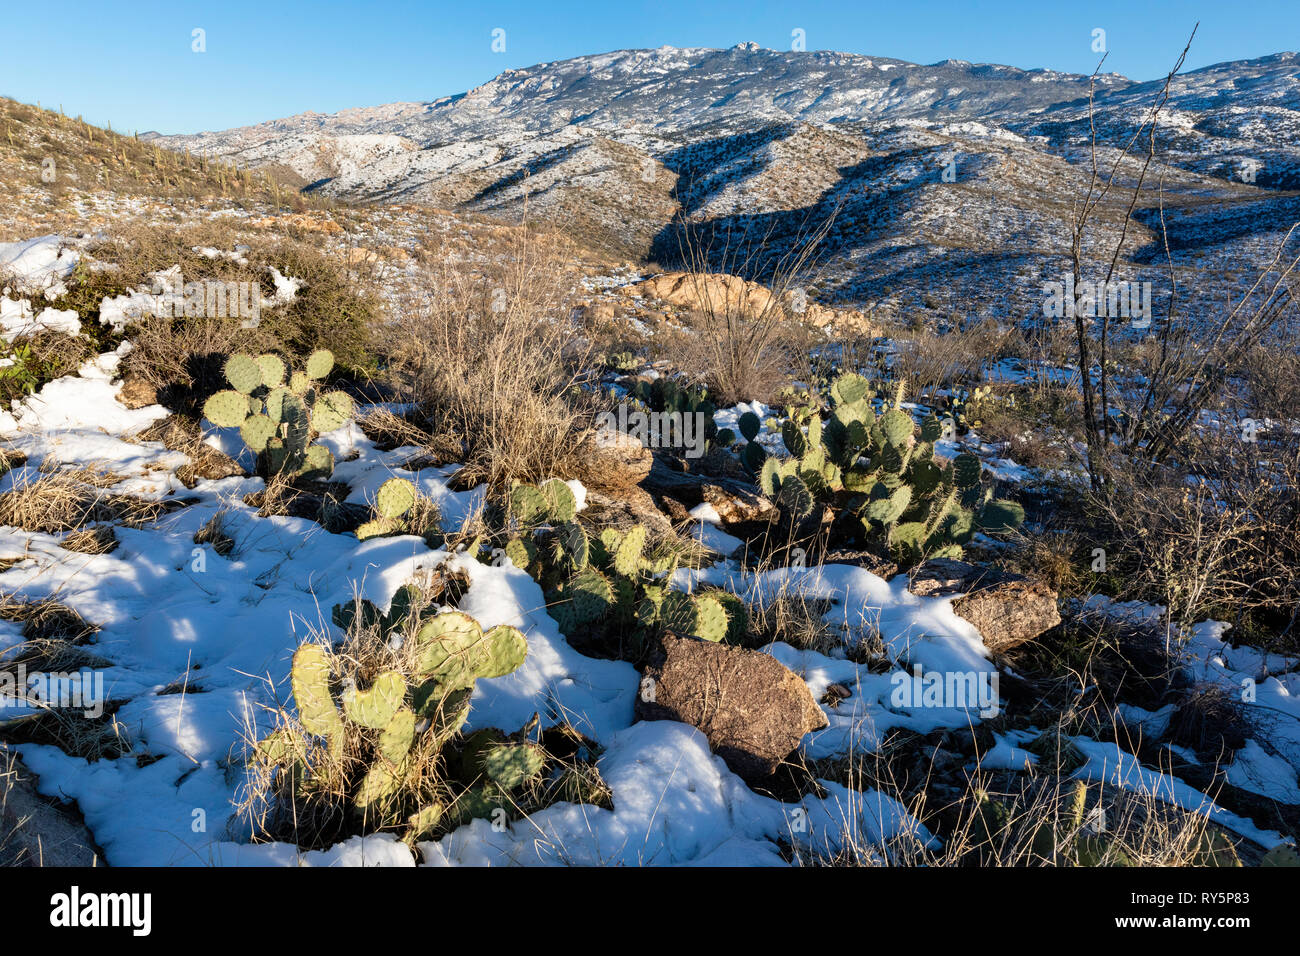 Rincon montagne con neve fresca, ficodindia cactus (Opuntia) in primo piano, Redington Pass, Tucson, Arizona Foto Stock